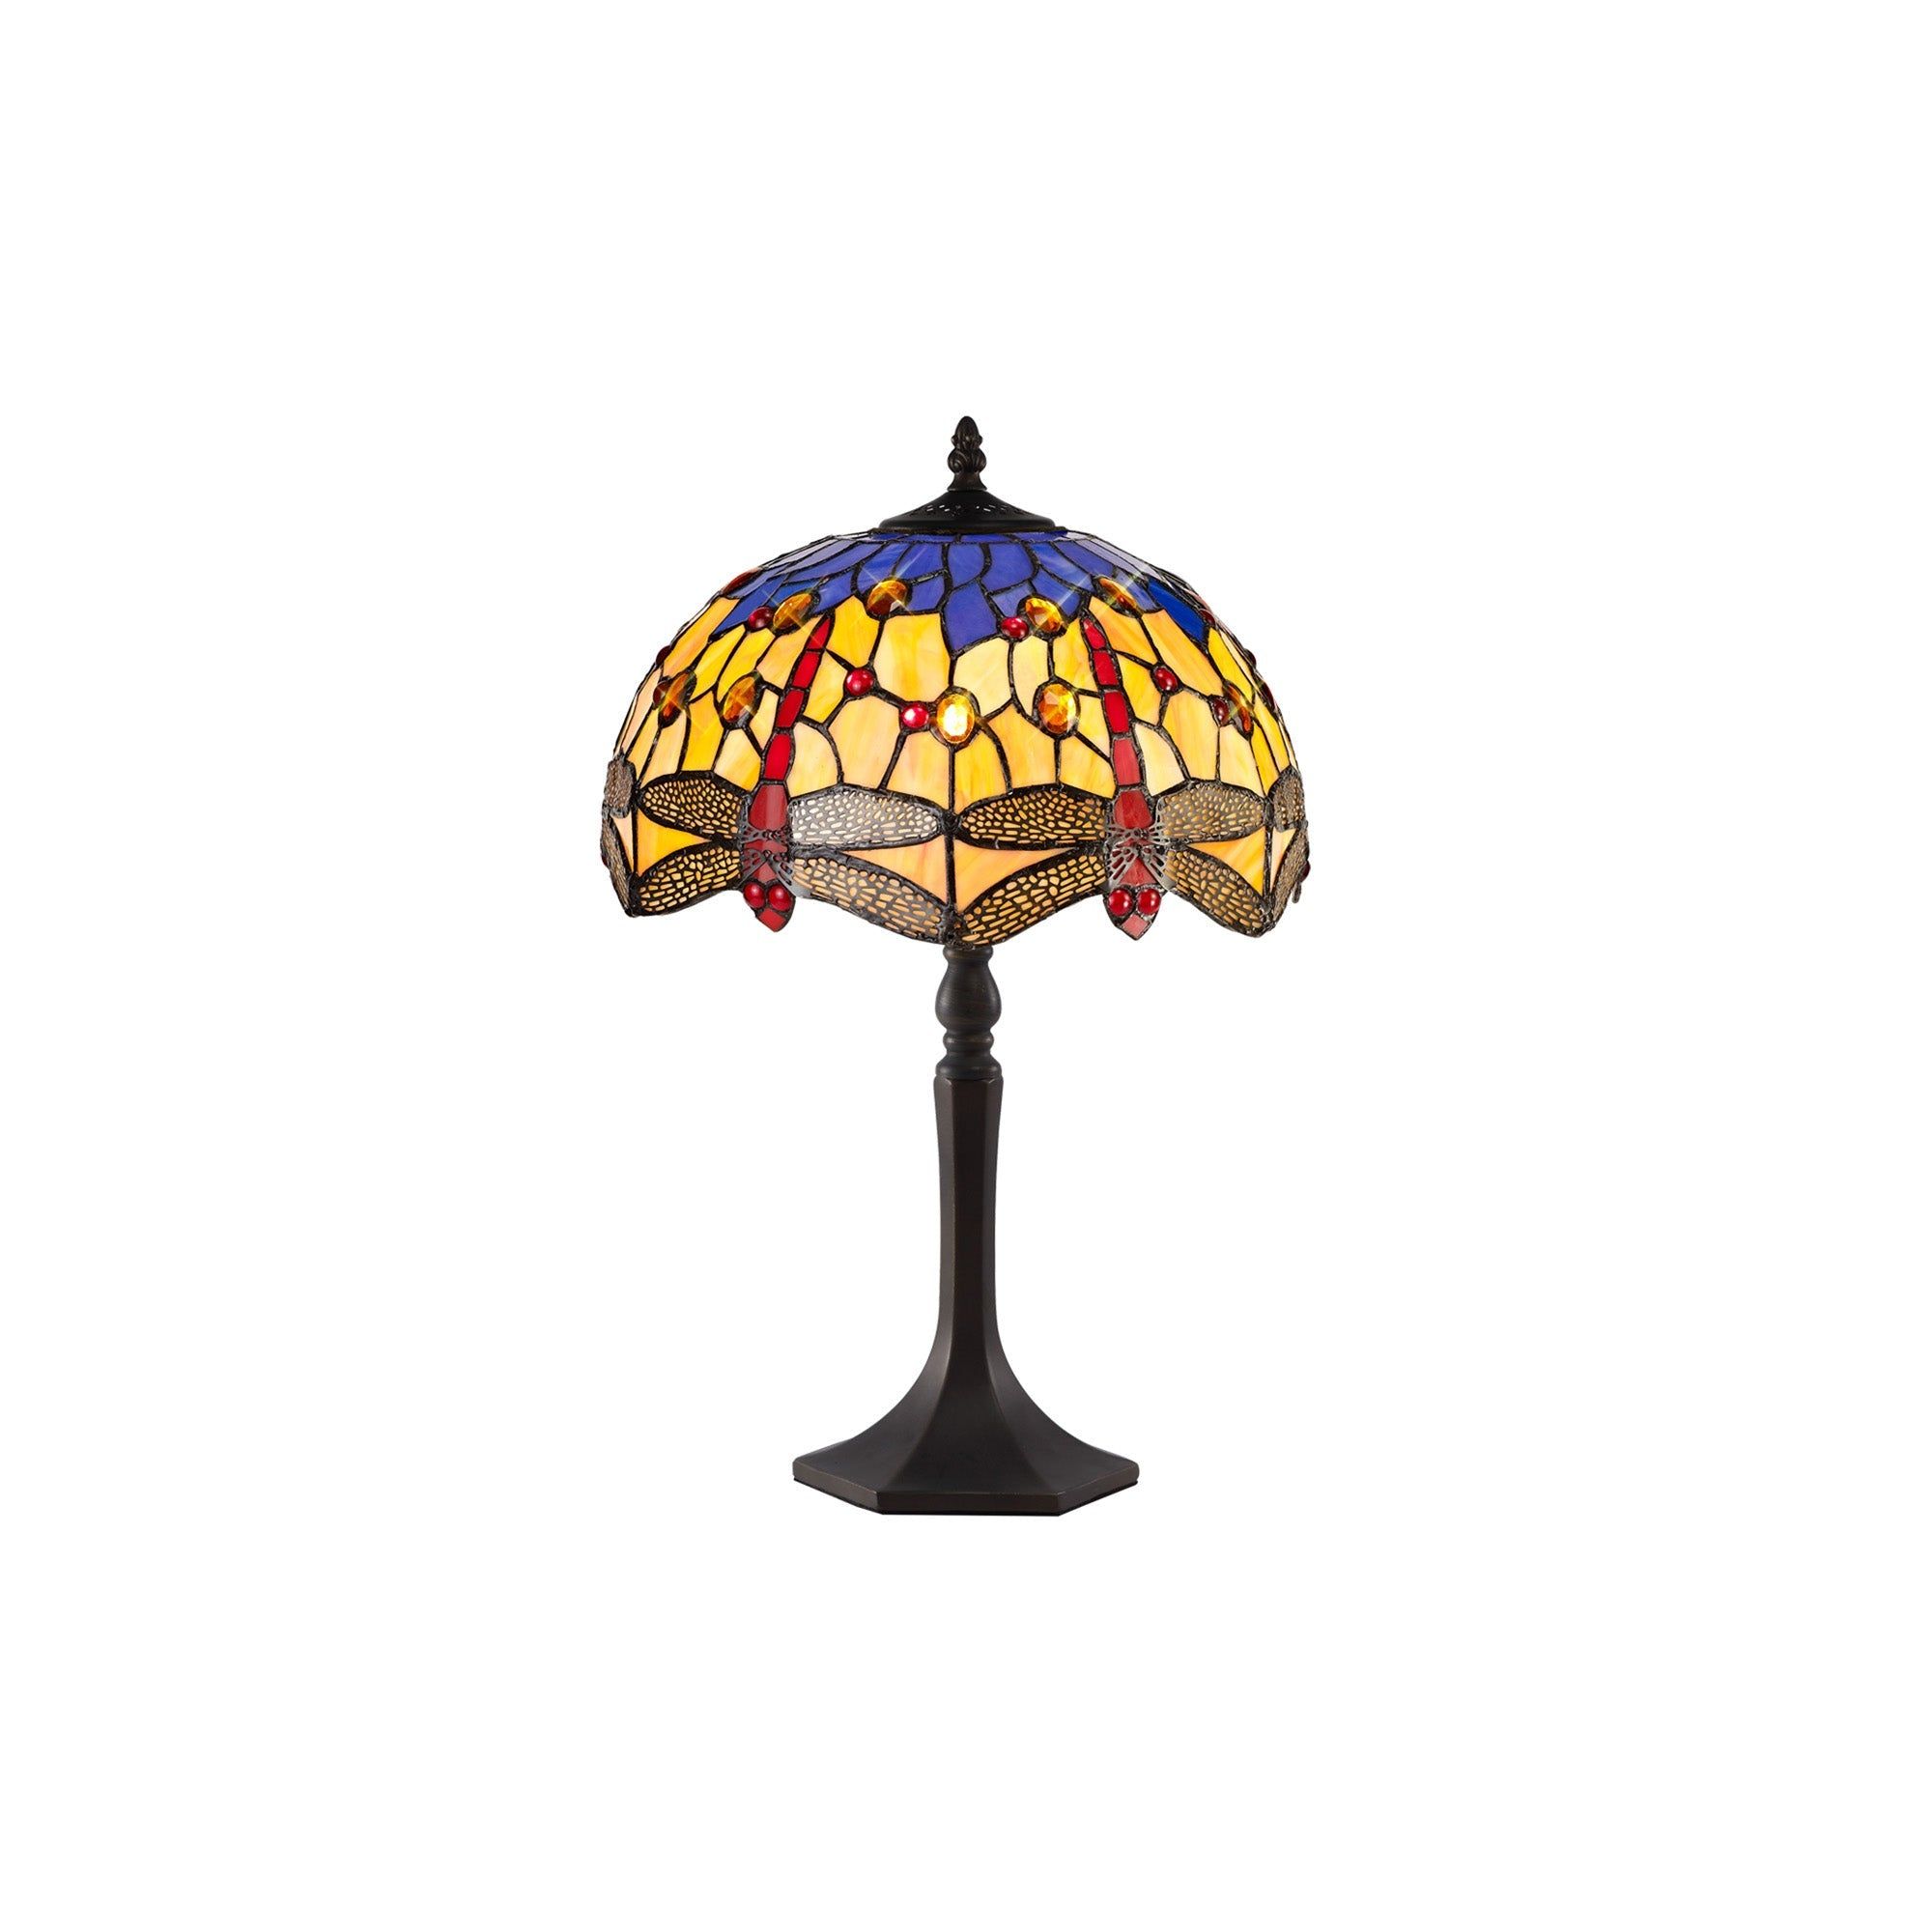 Nuflur 1 Light Octagonal/Tree Table Lamp E27 With 30cm Tiffany Shade Antique Brass